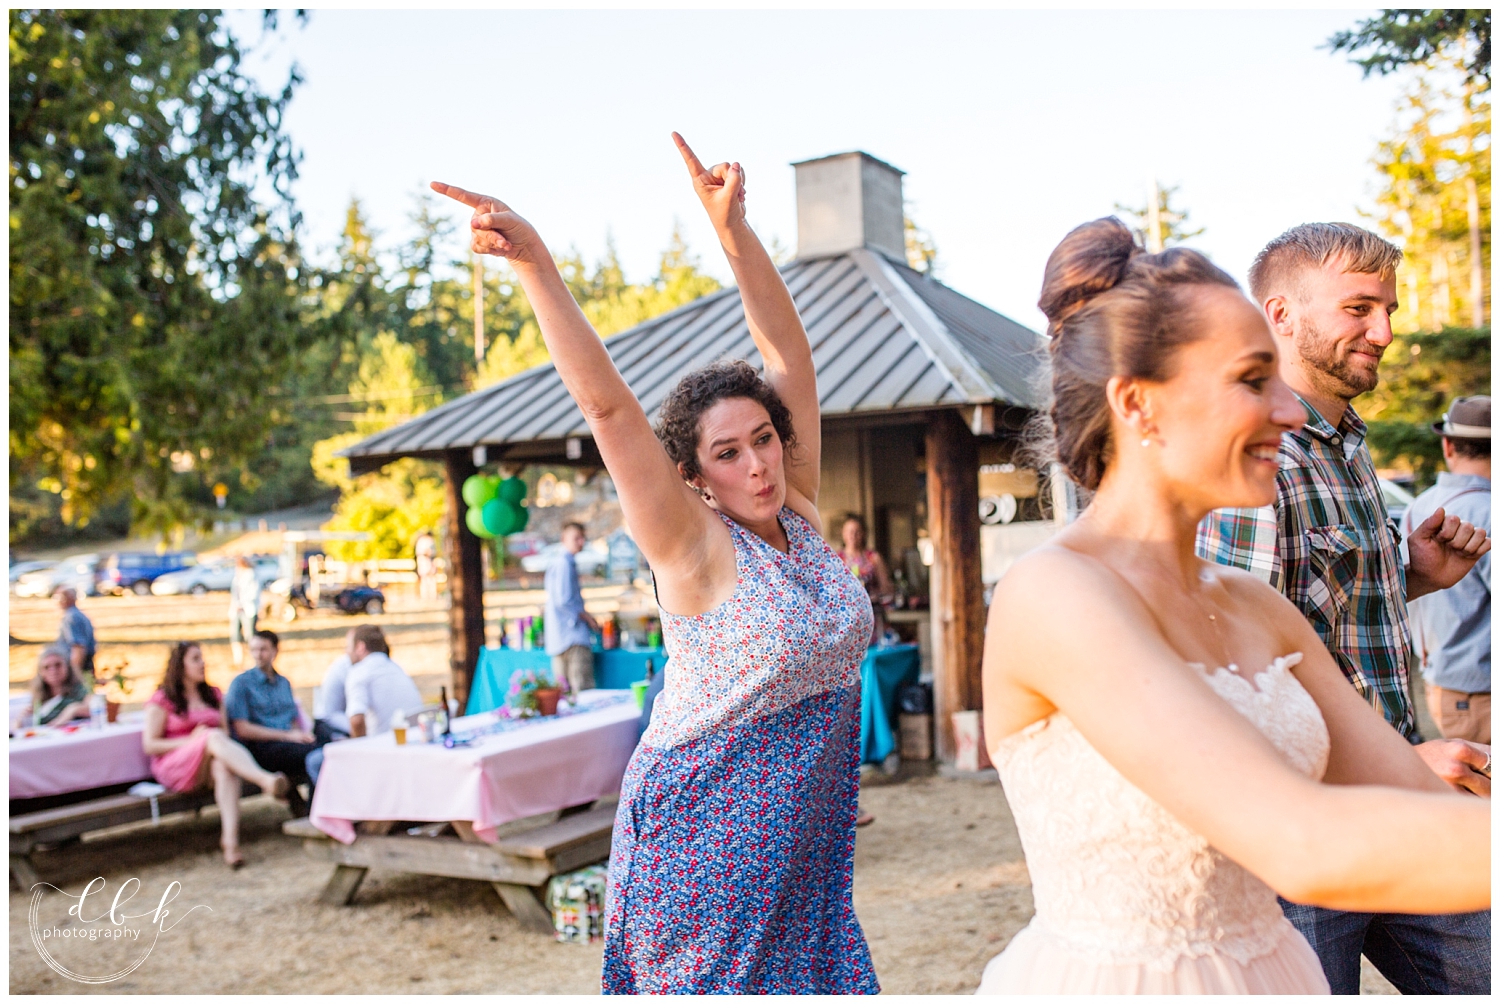 guests dancing with the bride at Anacortes wedding reception at Washington Park picnic area in Anacortes, Washington